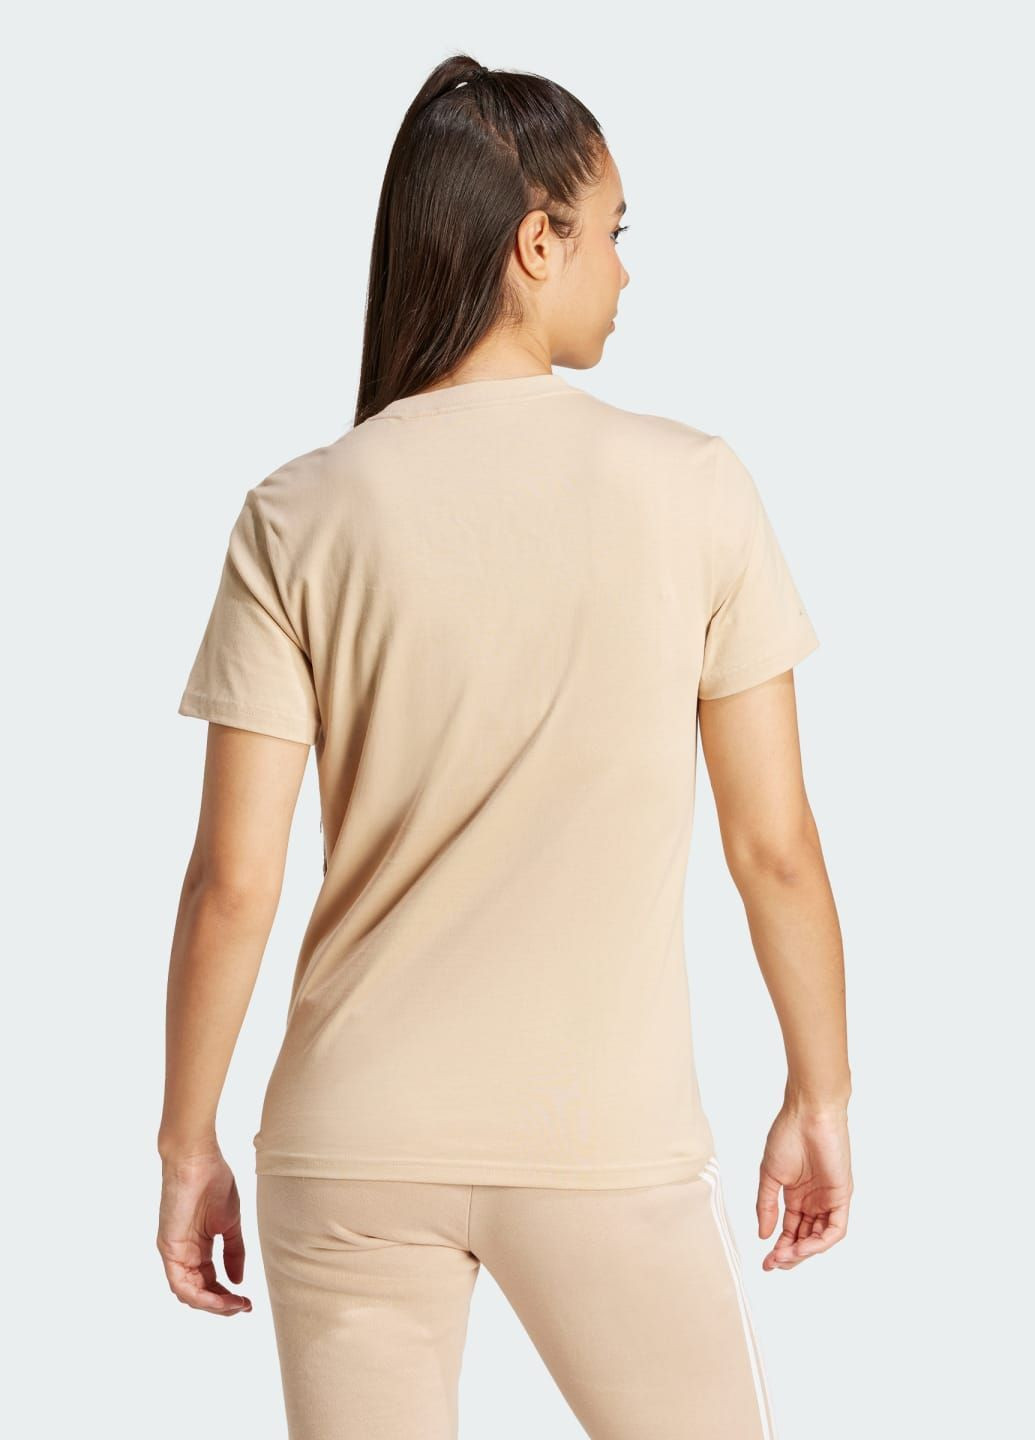 Бежевая всесезон футболка essentials logo adidas